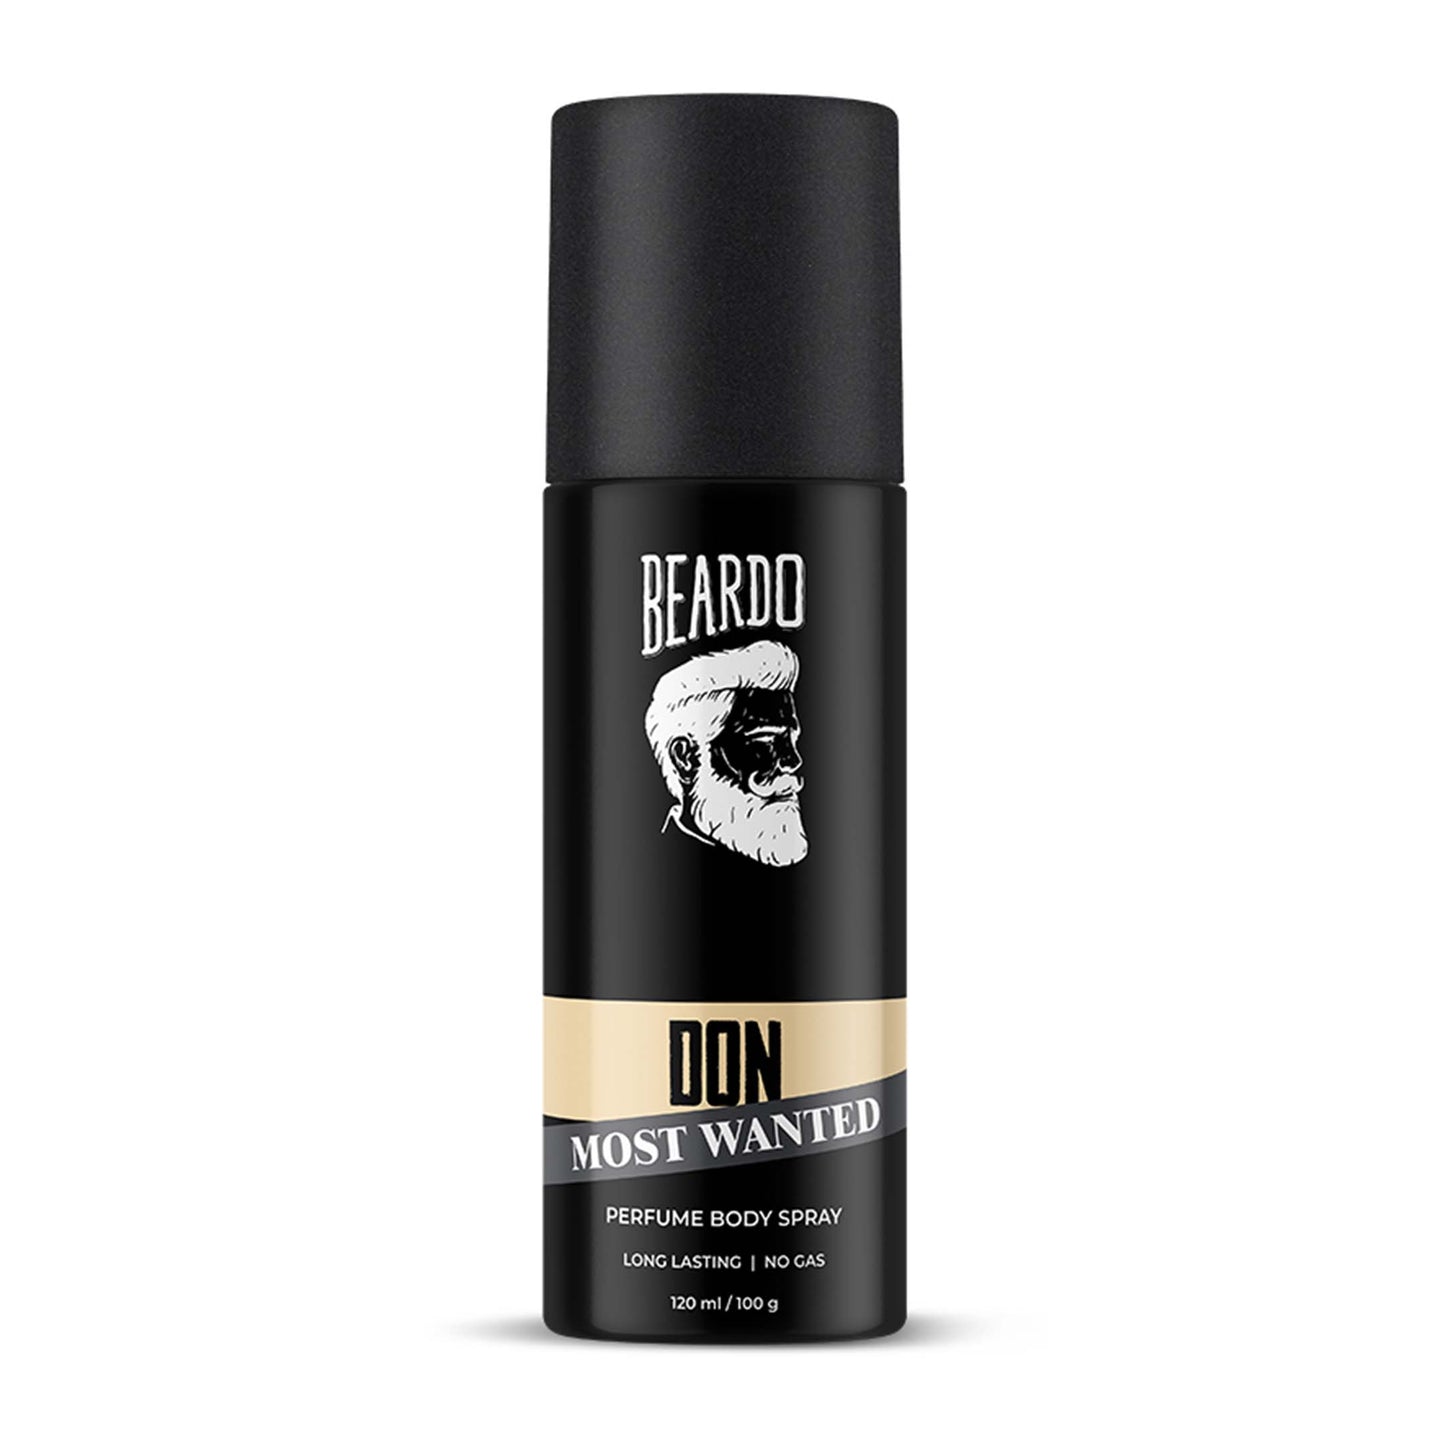 beardo don most wanted, perfume body spray, beardo don body spray, long lasting perfume, long lasting body spray